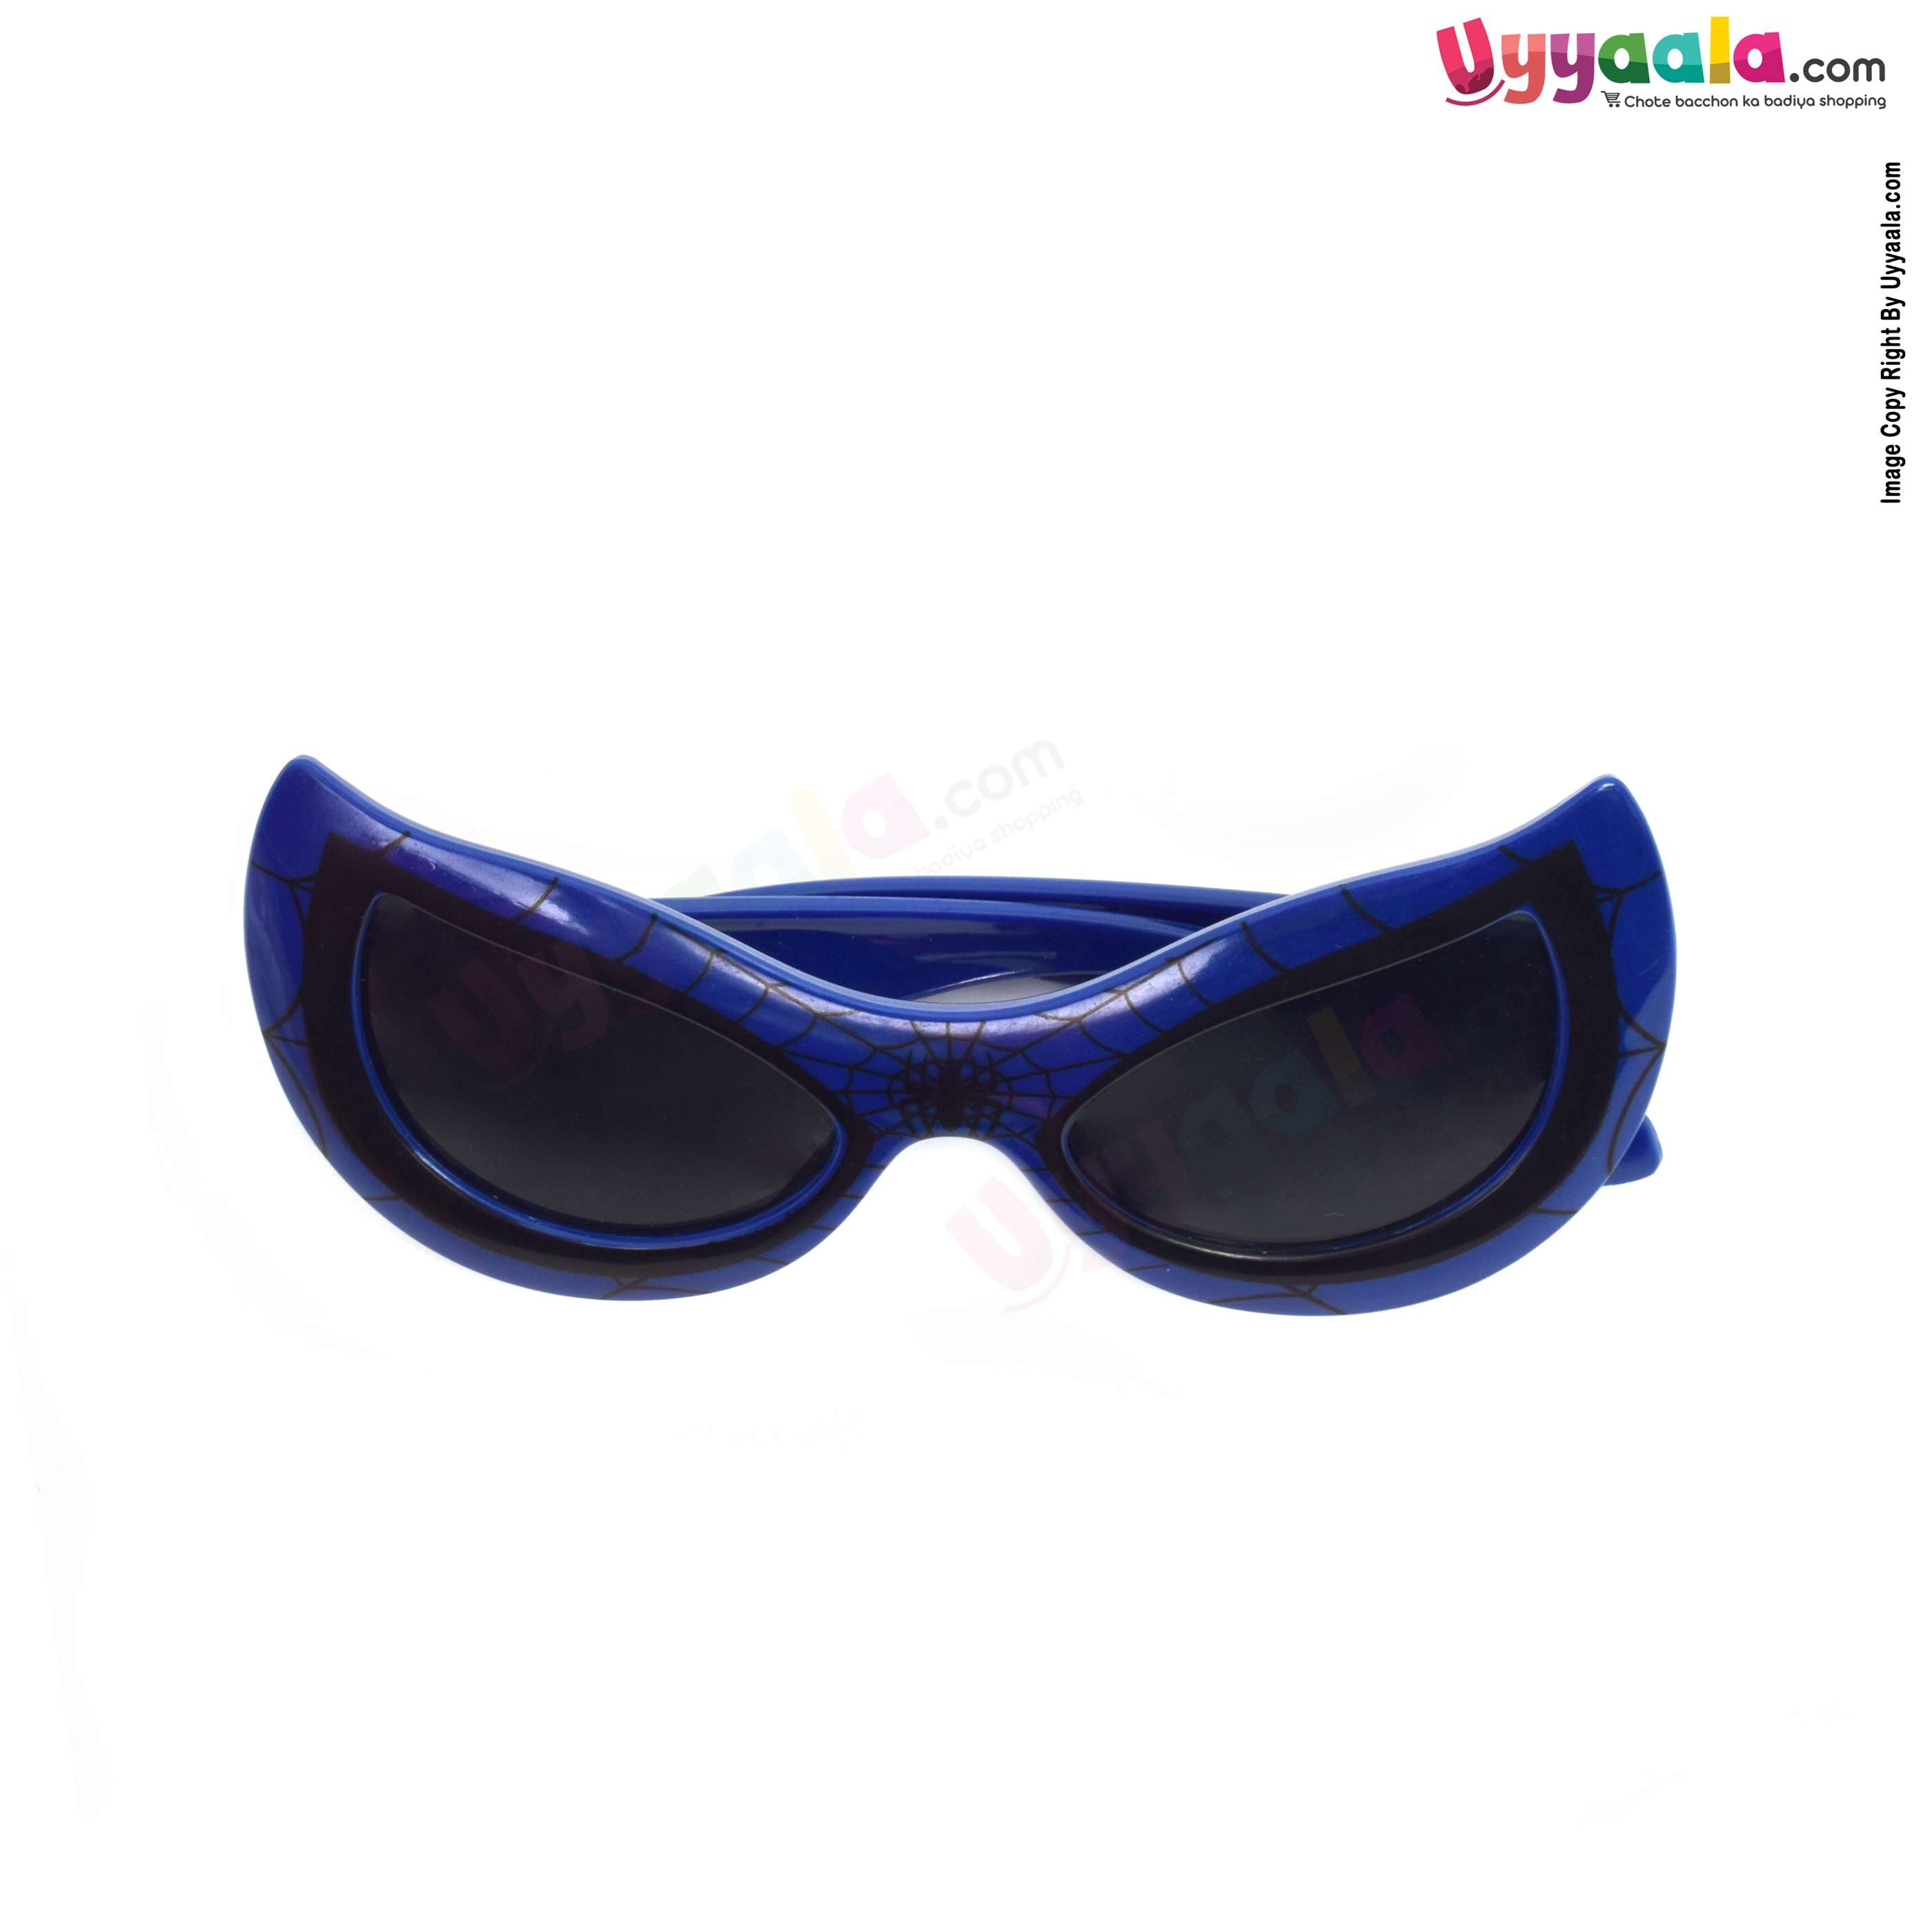 Stylish spider-man tinted cat-eye sunglasses for kids - dark blue with black web print, 1 - 10 years